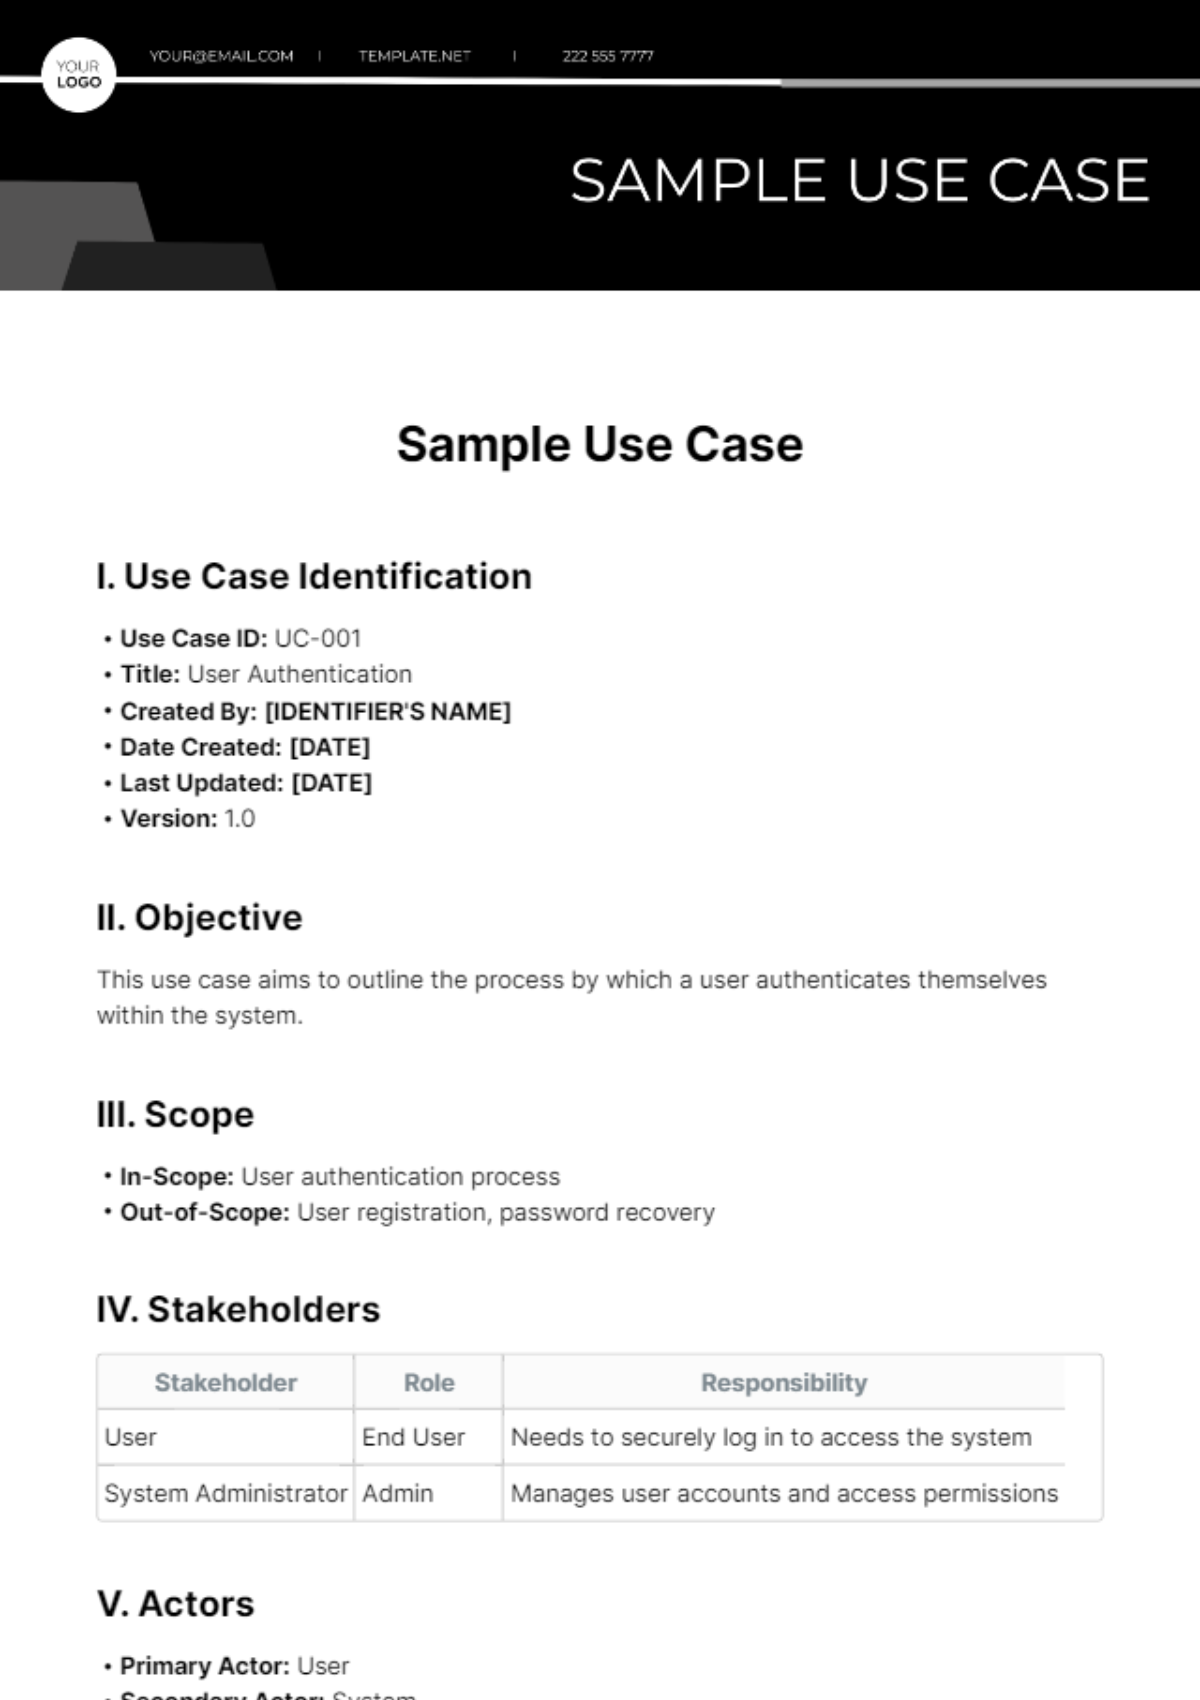 Sample Use Case Template